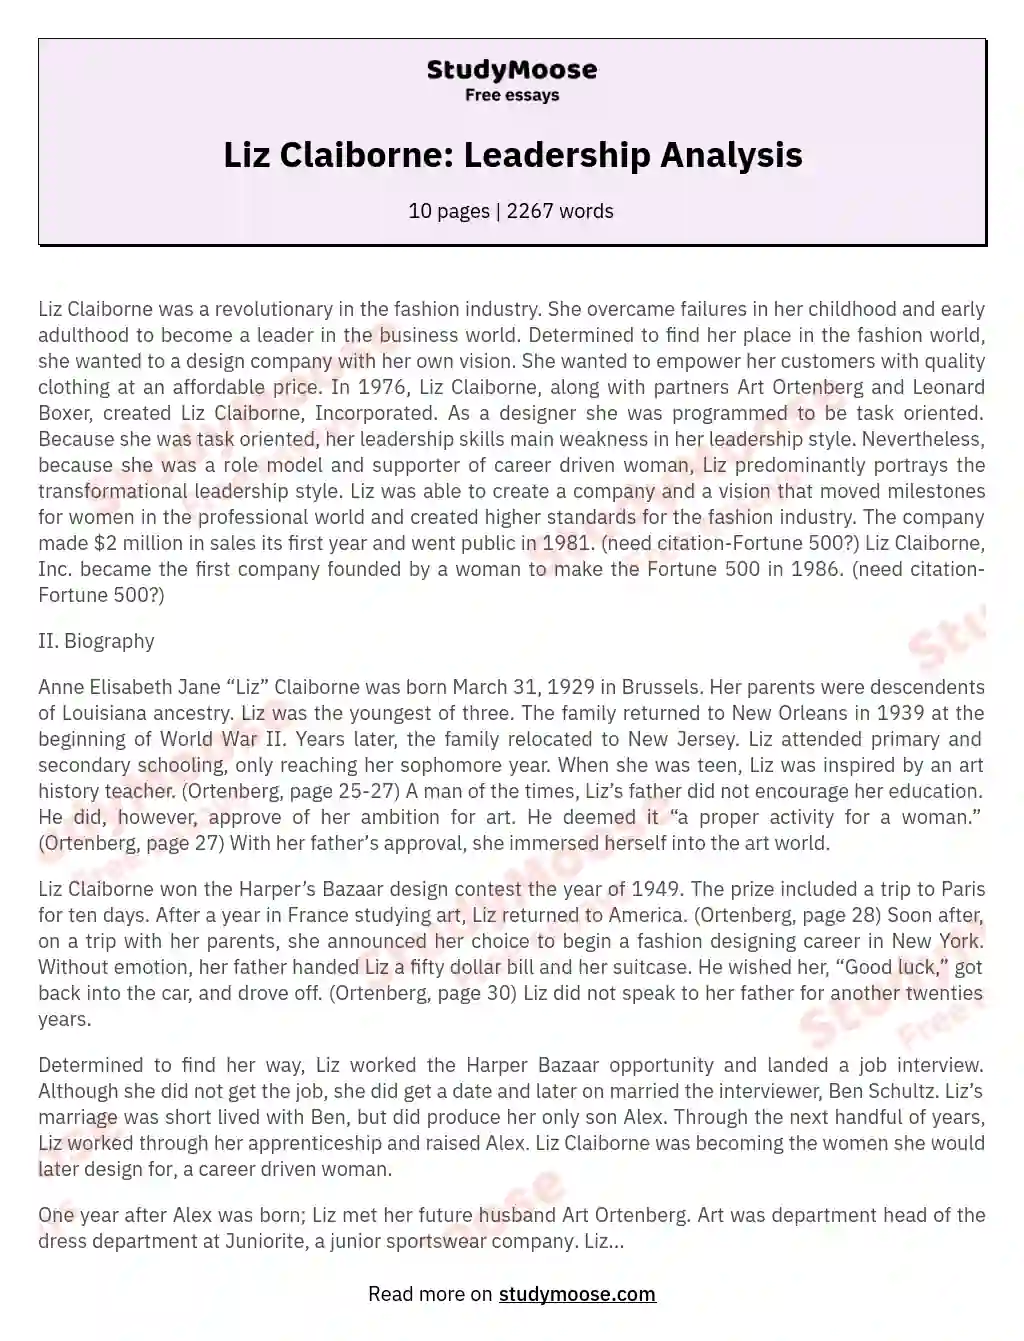 Liz Claiborne: Leadership Analysis essay